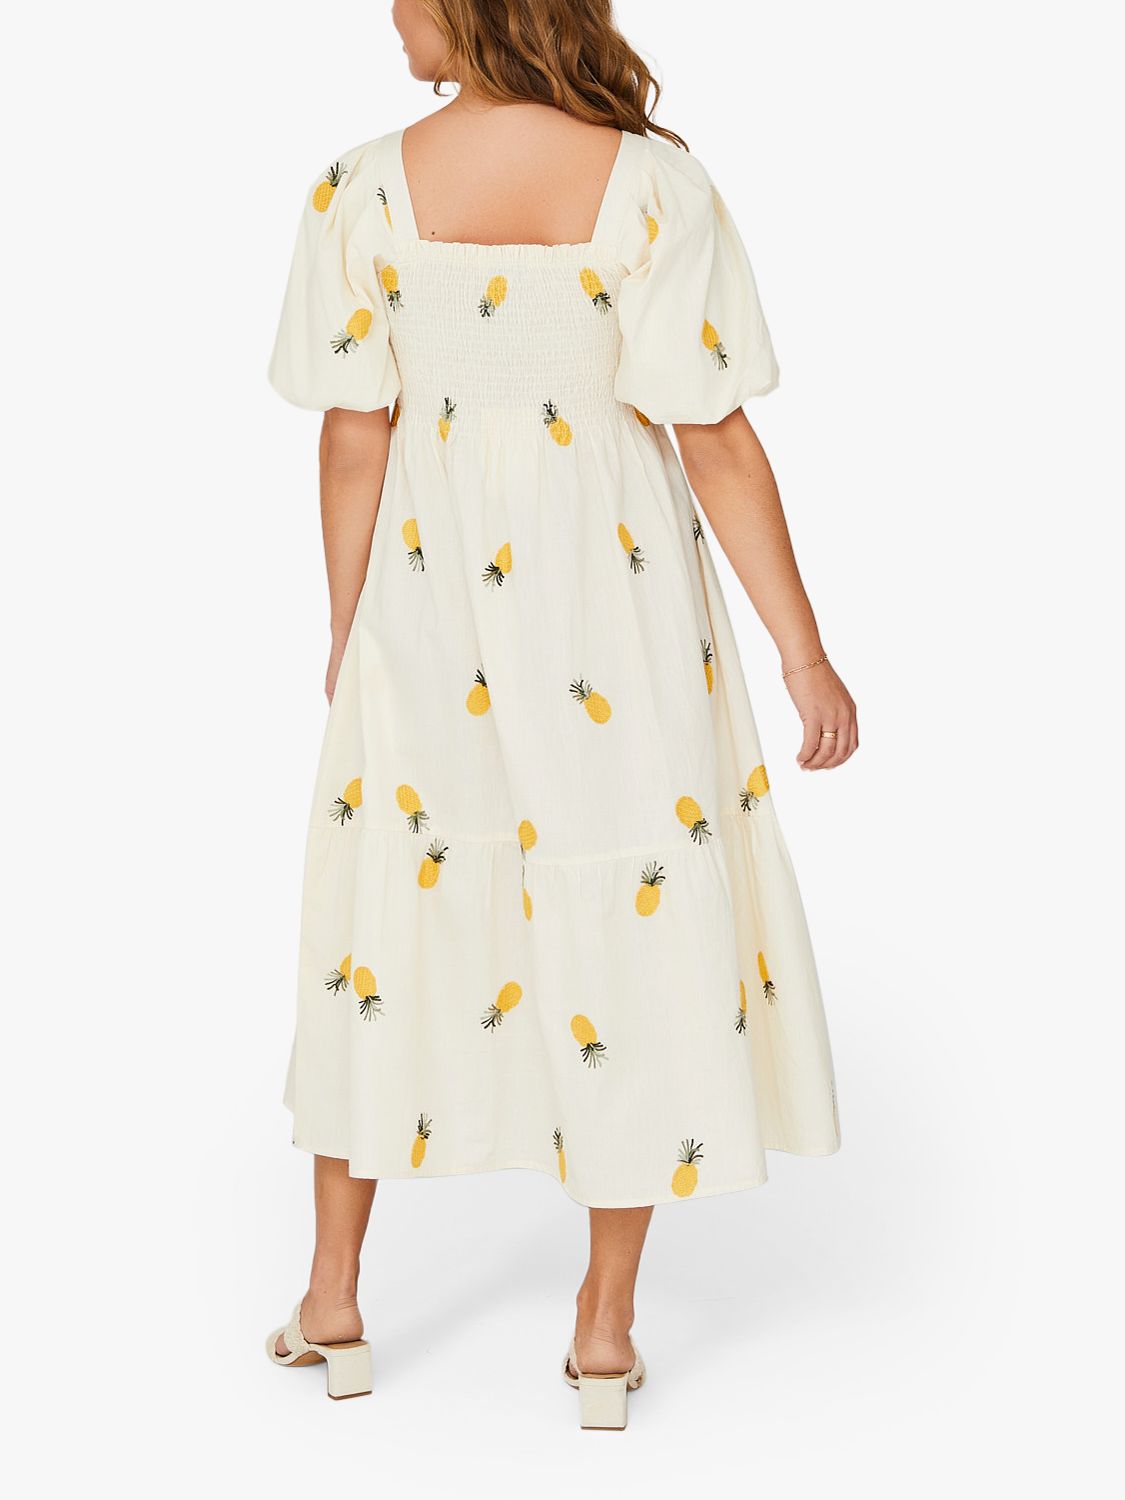 A-VIEW Cheri Pineapple Print Puff Sleeve Midi Cotton Dress, Sand/Yellow, 8